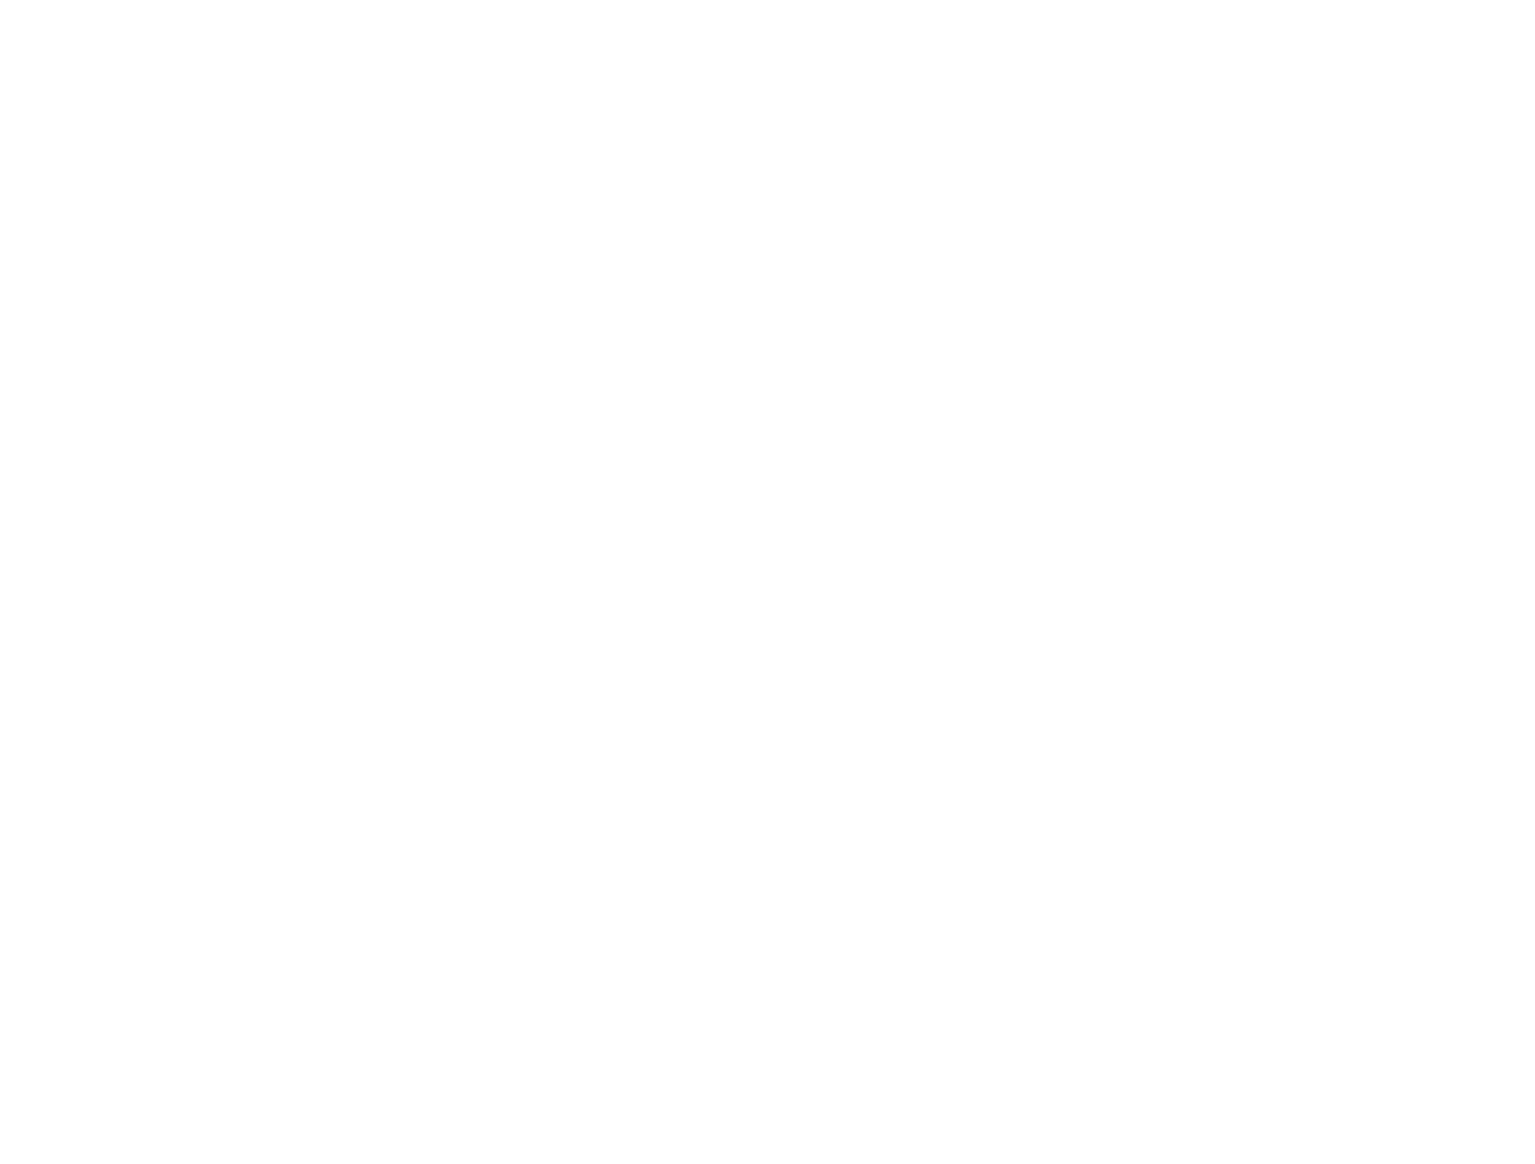 Sutro Biopharma logo for dark backgrounds (transparent PNG)